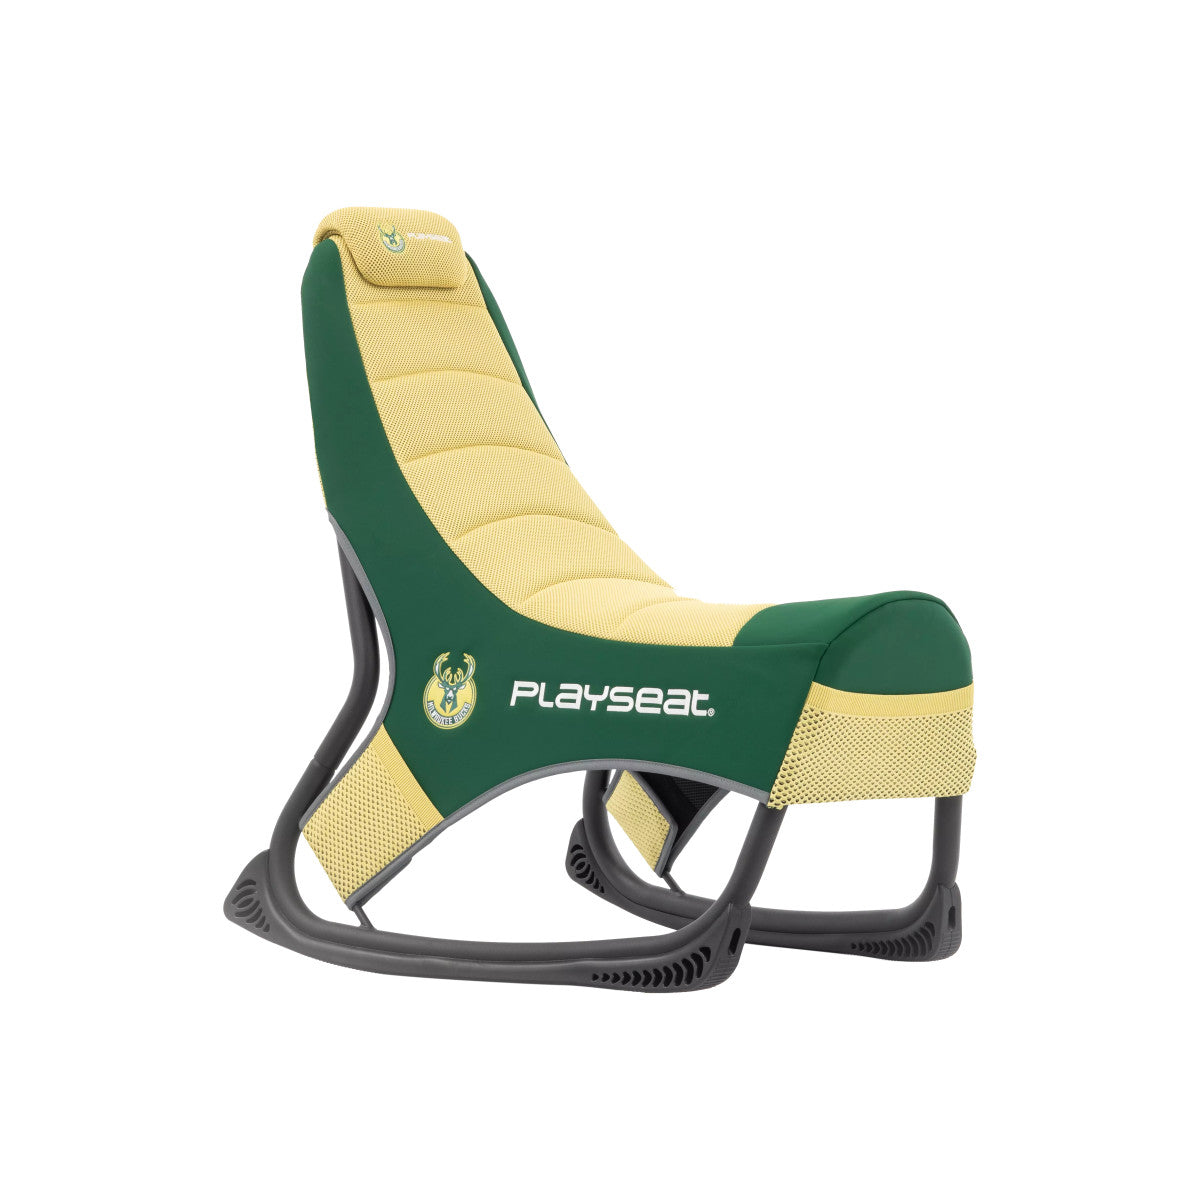 PLAYSEAT® CHAMP NBA Padded Seat - Green/Yellow